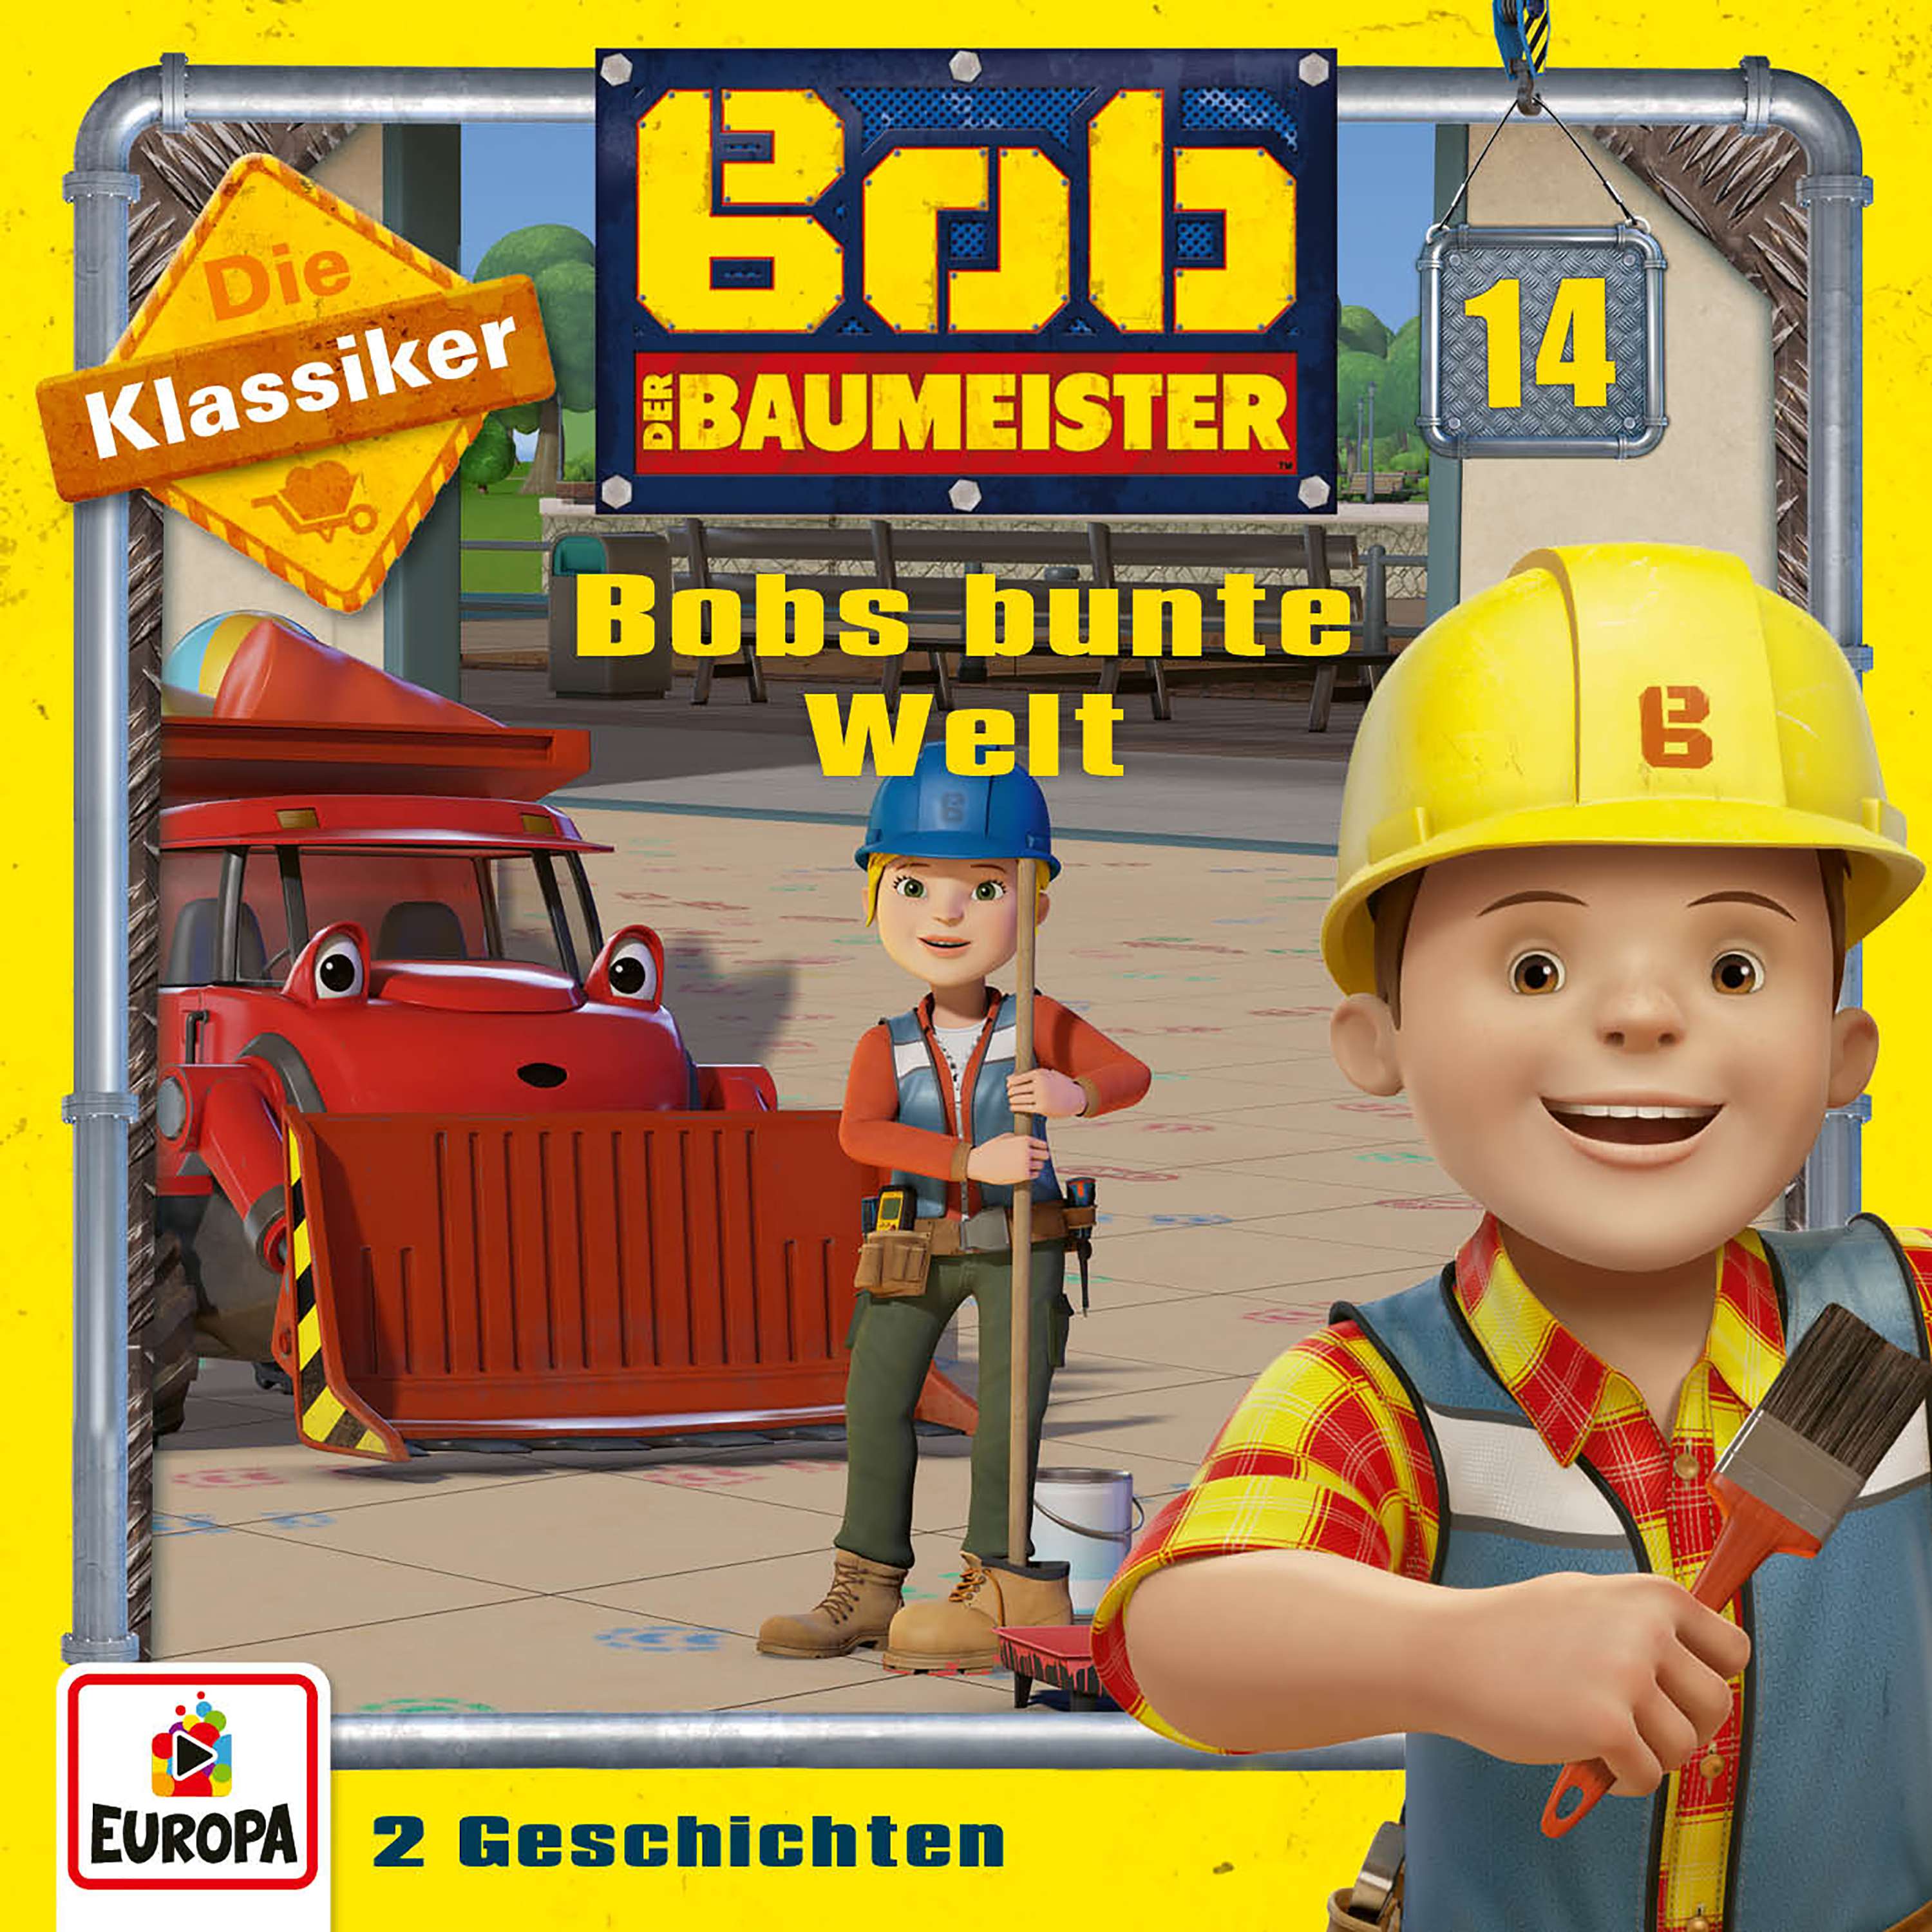 Bob der Baumeister: Bobs bunte Welt (Die Klassiker)